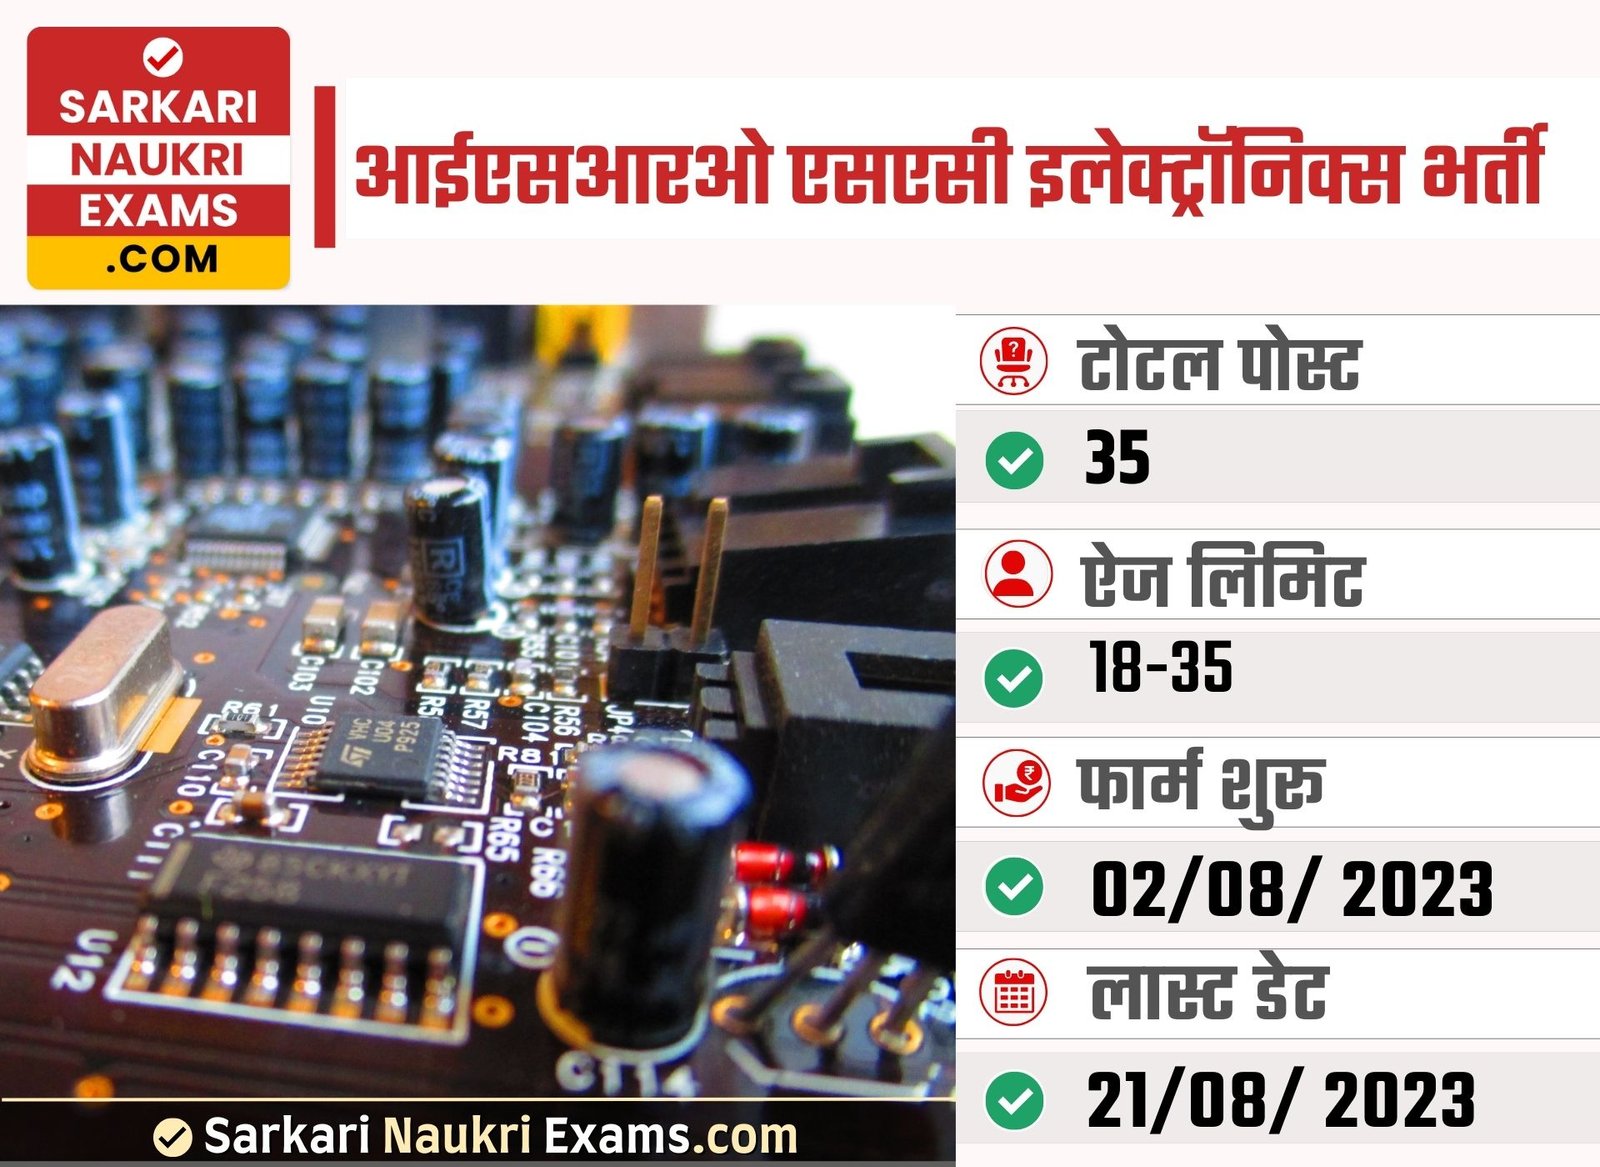 ISRO SAC Electronics Recruitment 2023 | Last Date: 21-08-2023 Apply Online